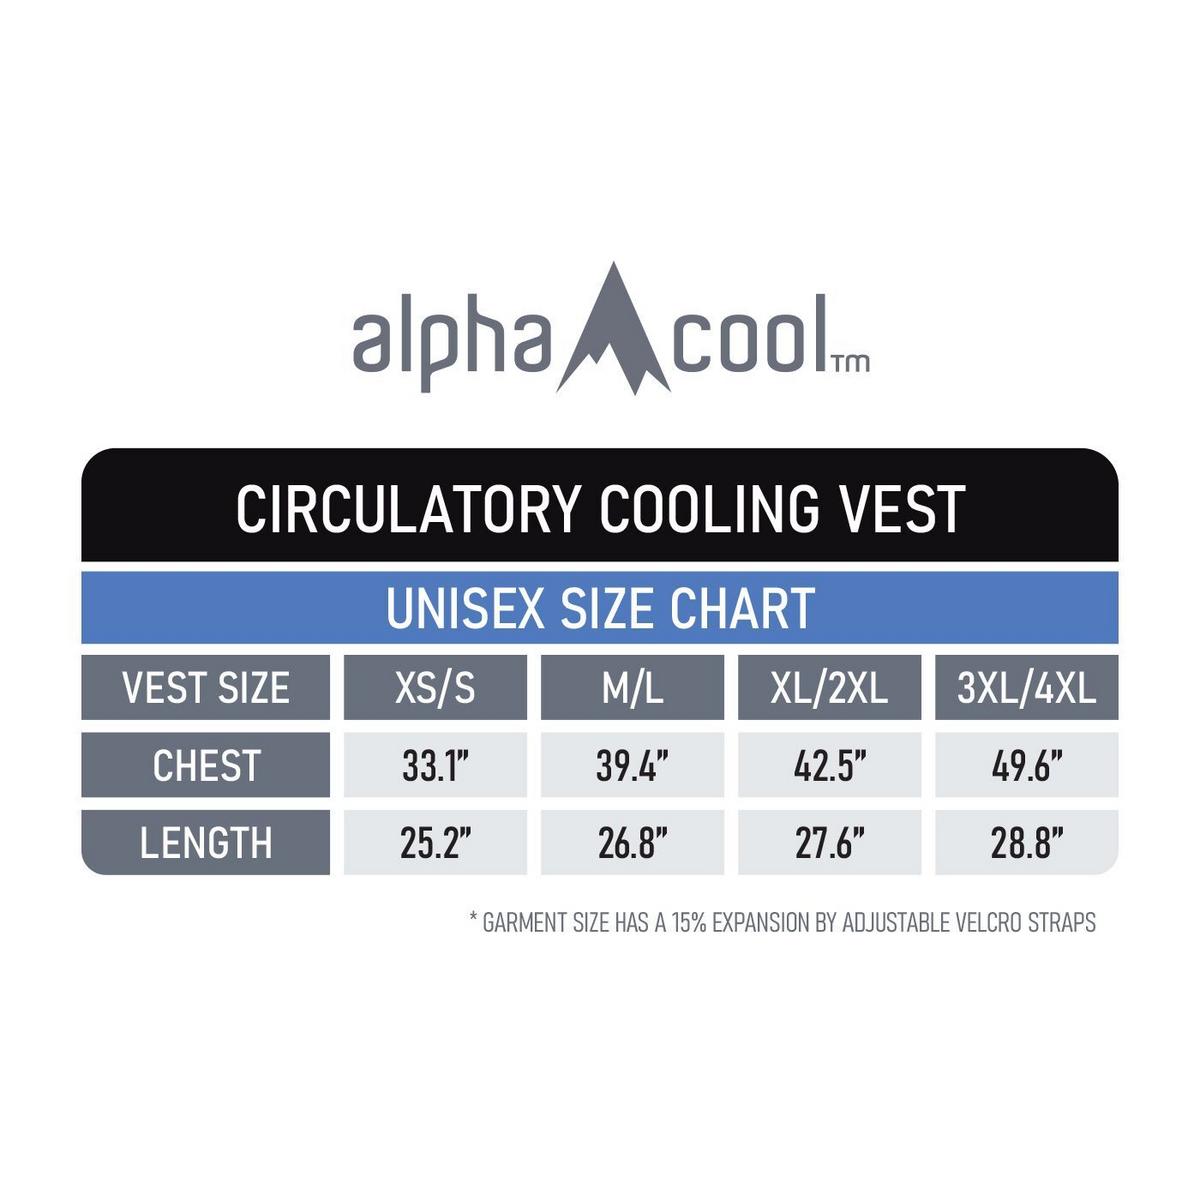 AlphaCool 7V Circulatory Cooling Vest System